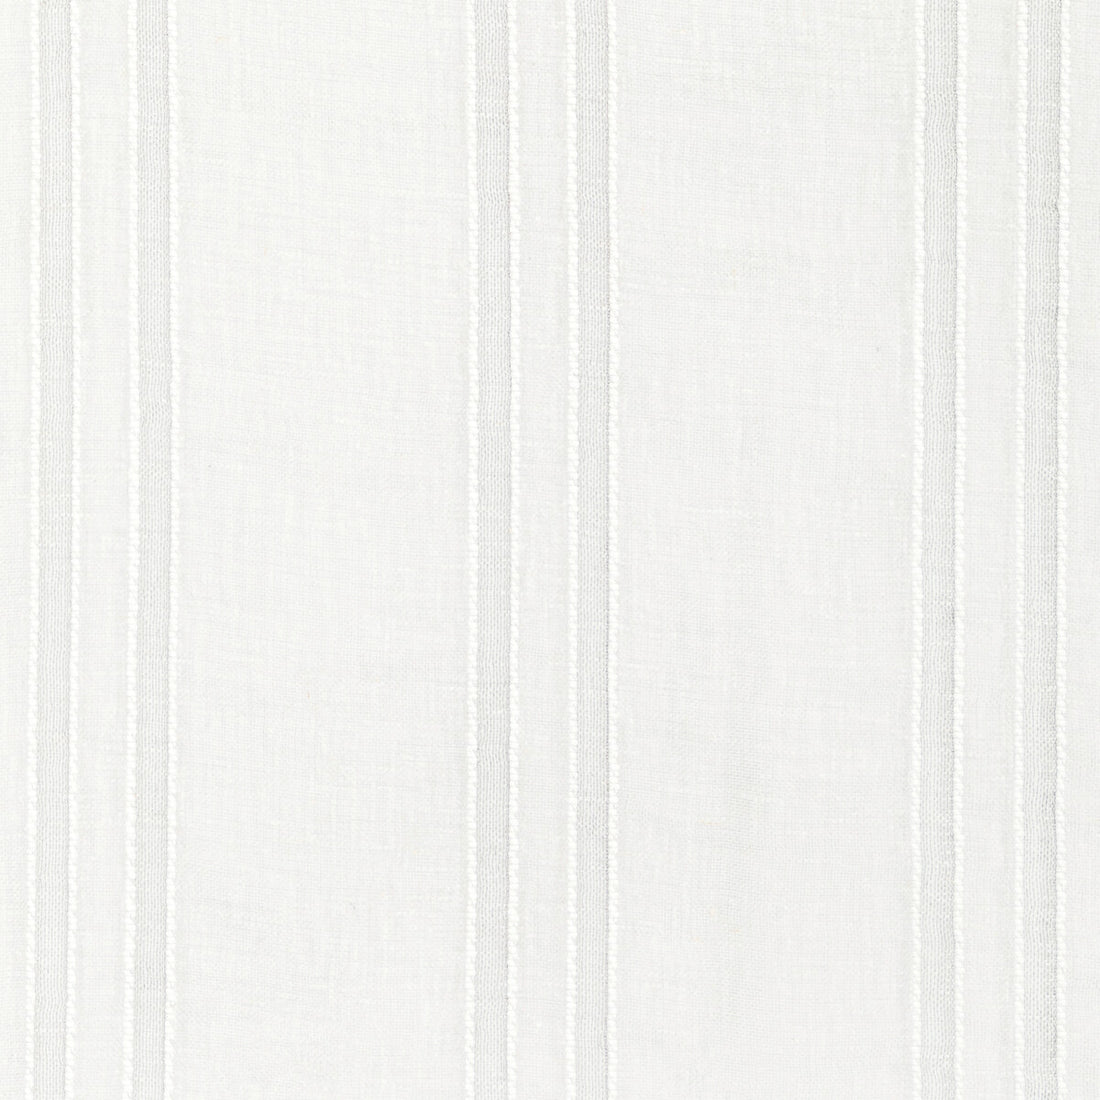 Kravet Basics fabric in 4805-101 color - pattern 4805.101.0 - by Kravet Basics in the Gis collection